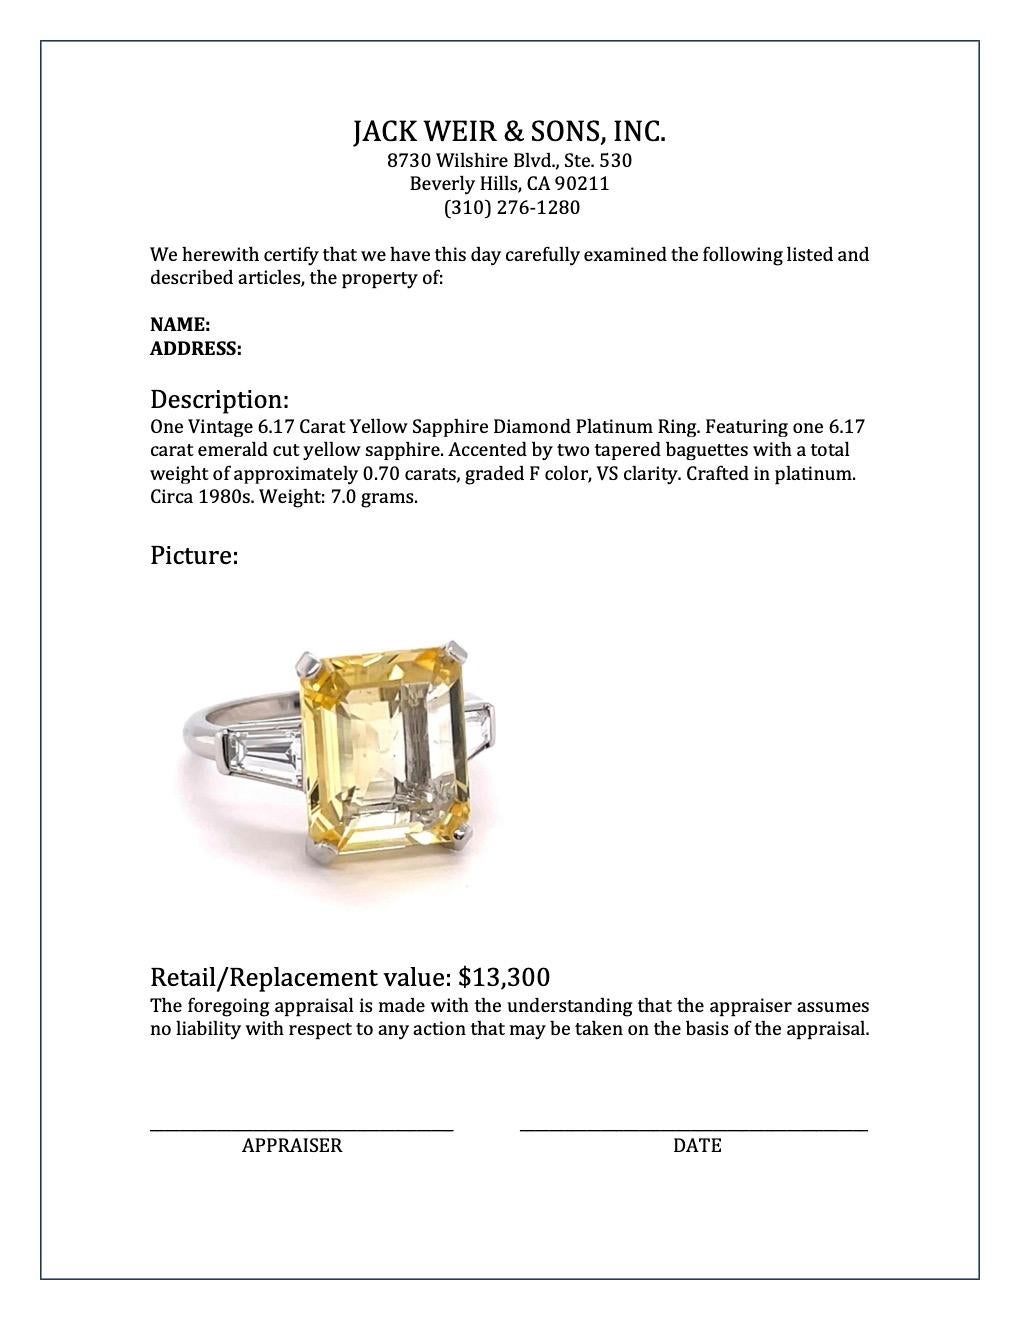 Women's or Men's Vintage 6.17 Carat Yellow Sapphire Diamond Platinum Ring